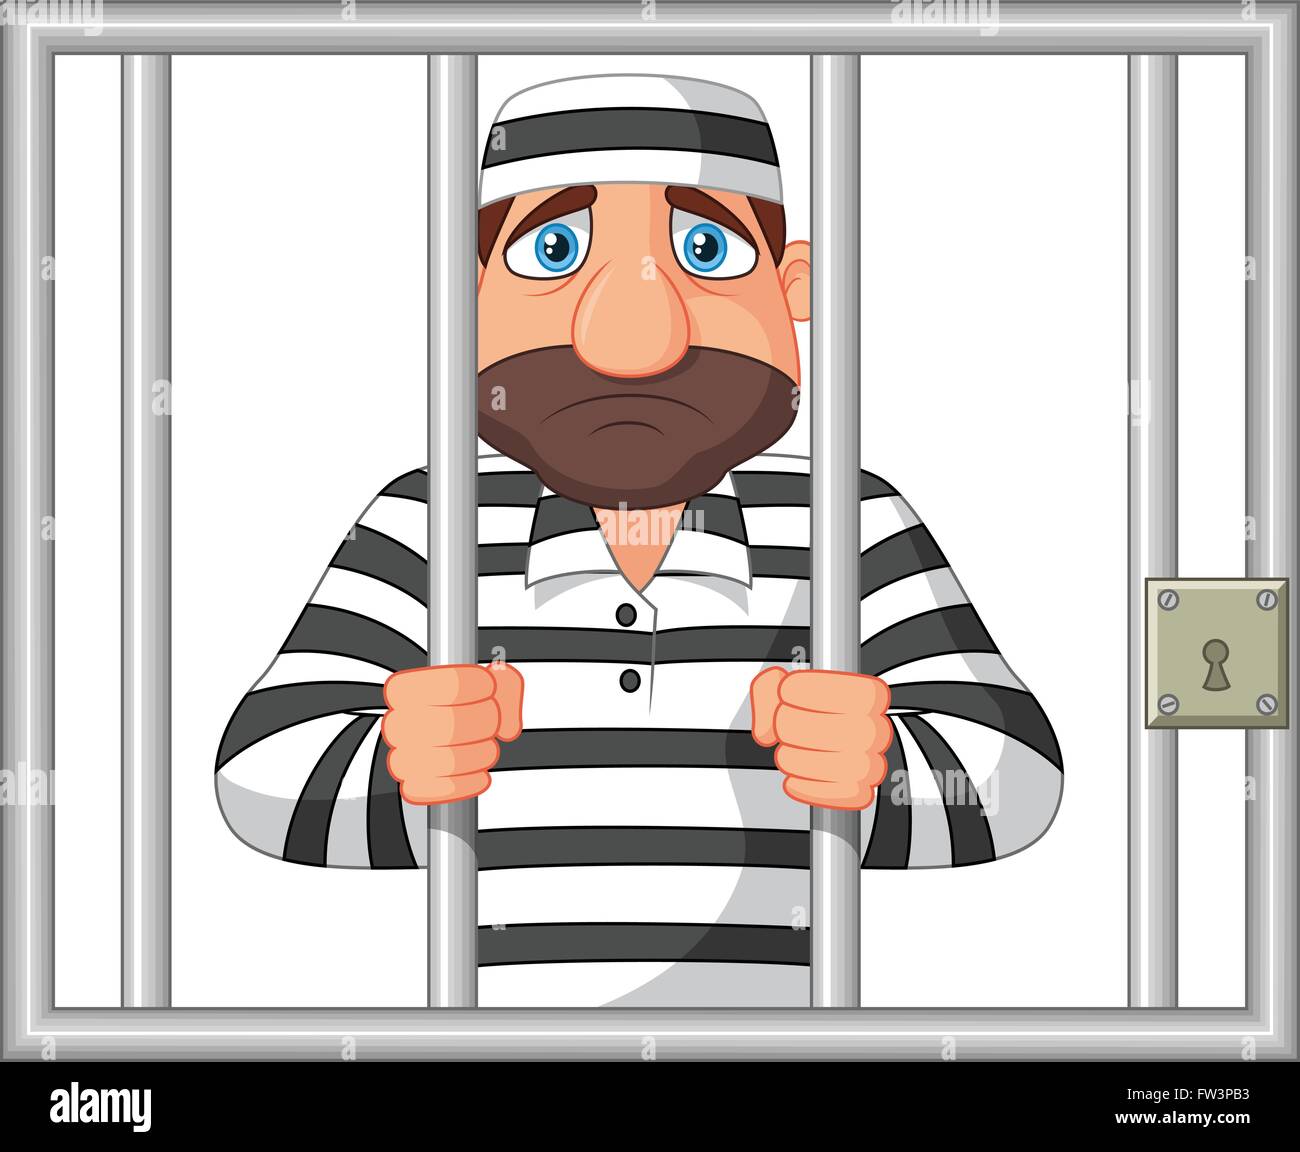 Prisoner behind bar Stock Vector